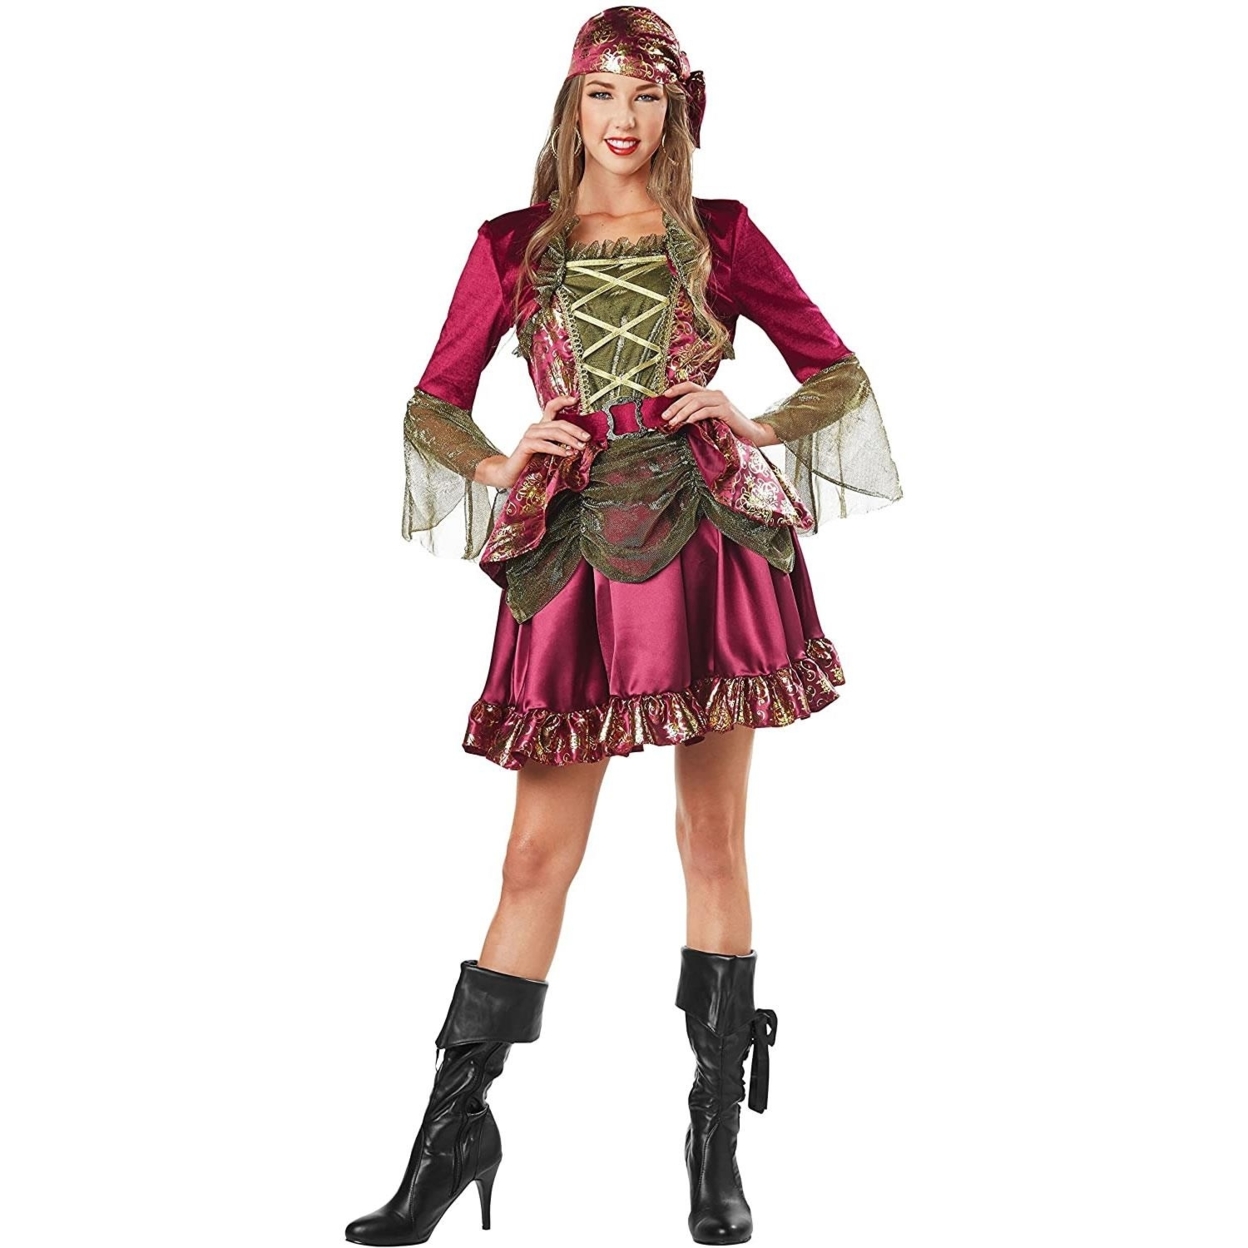 Lady Pirate She-Pirate Captain Size S 4/6 Womens Costume Dress Seasons